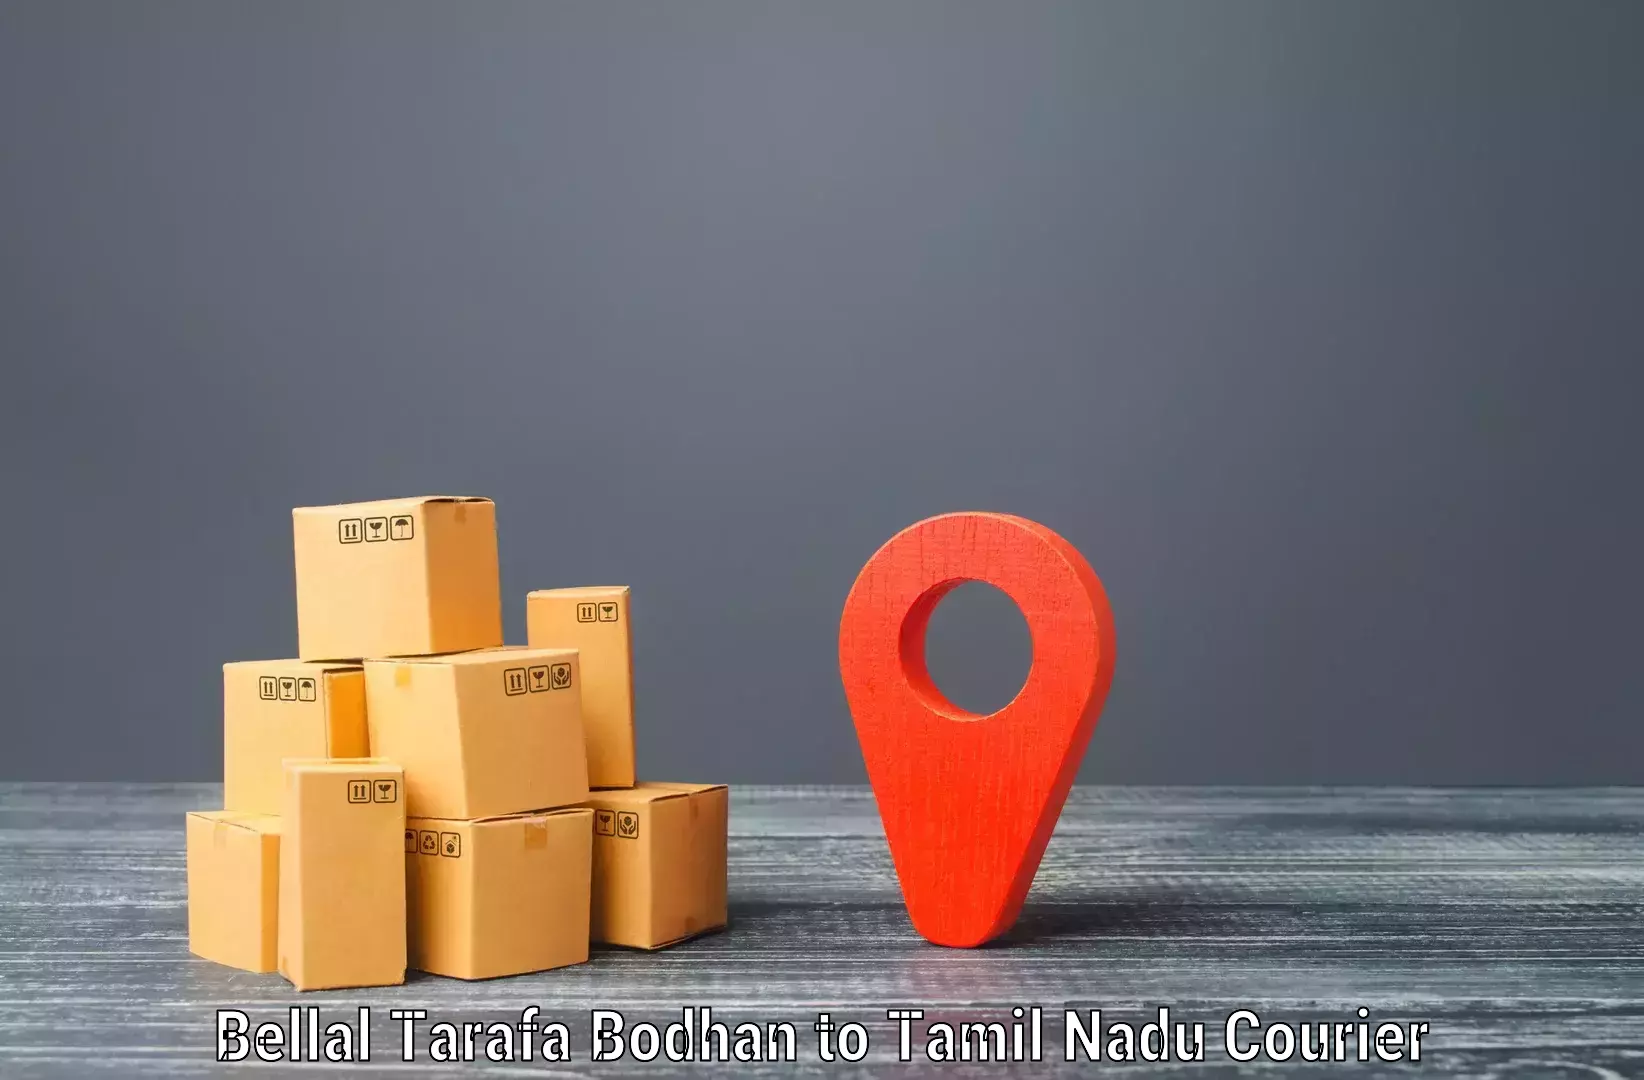 Urgent courier needs Bellal Tarafa Bodhan to Polur